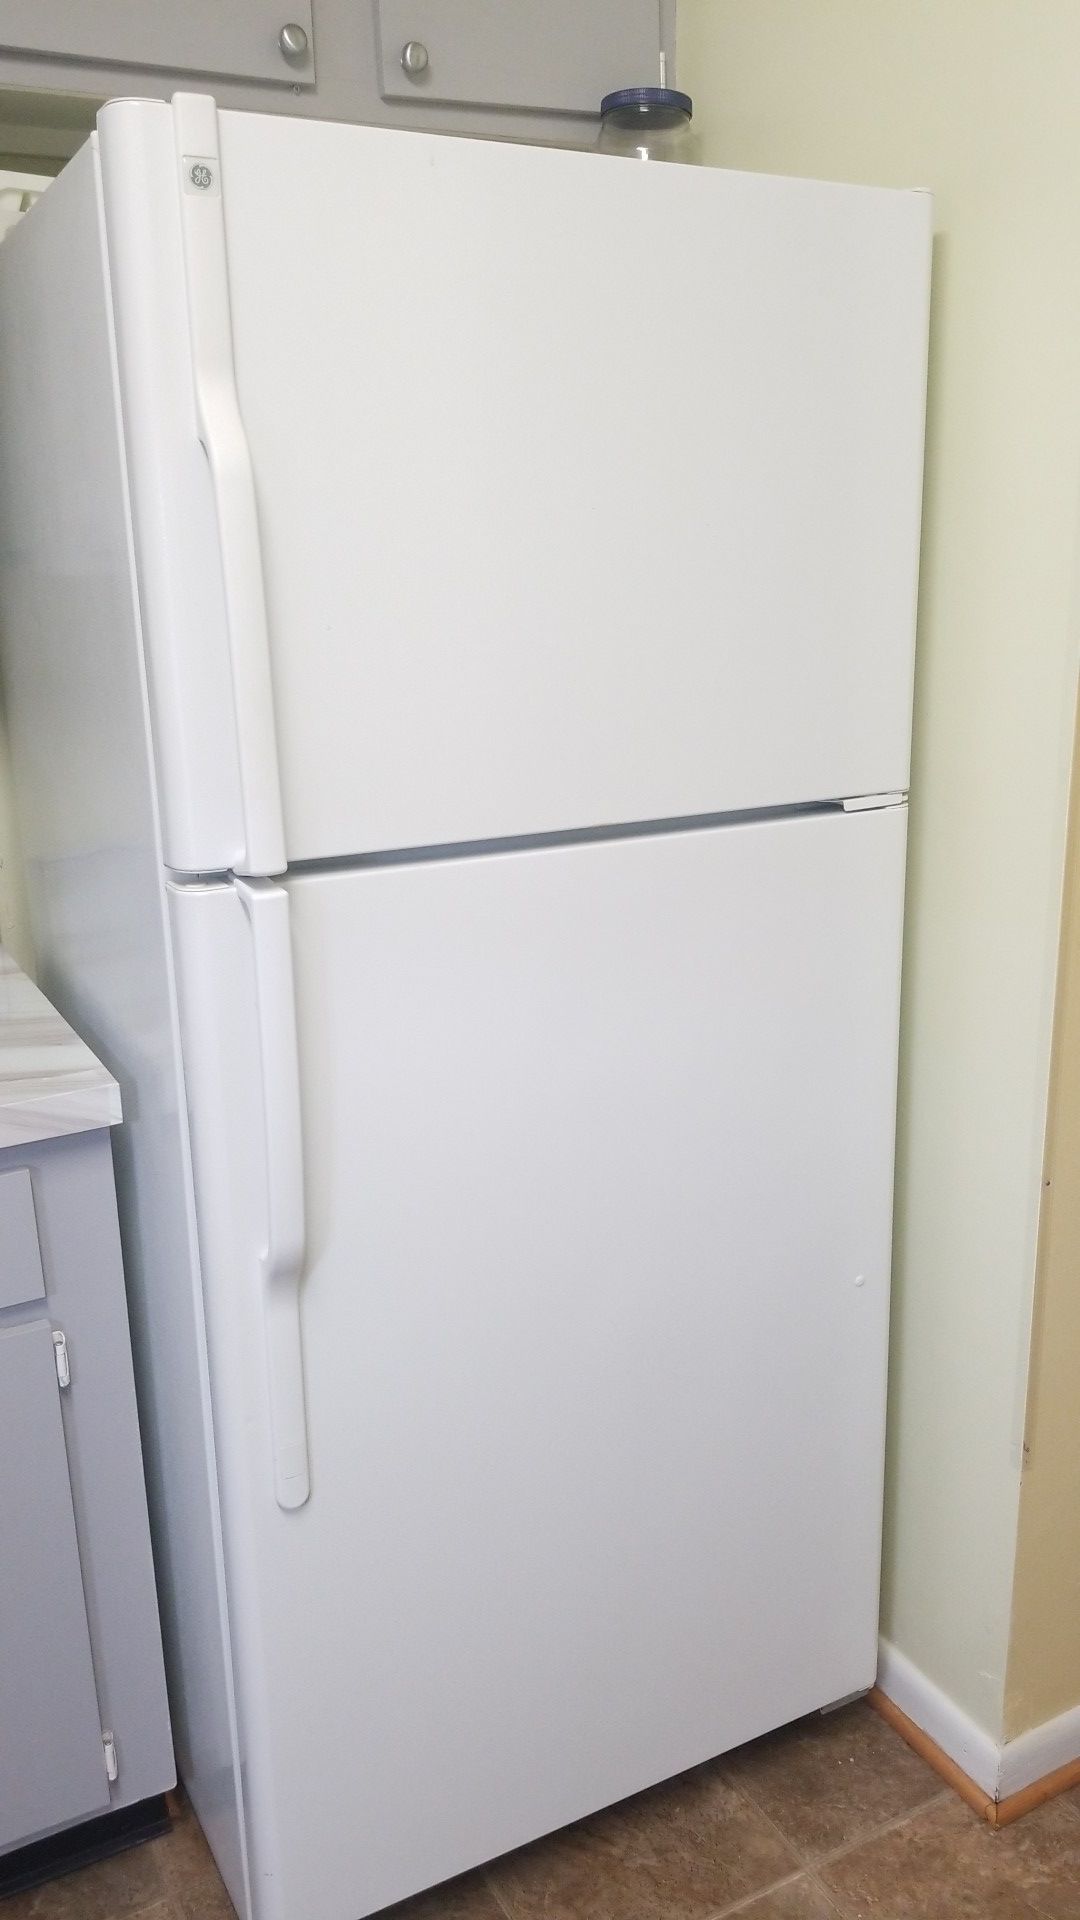 Refrigerator 'generally electric "(GE)